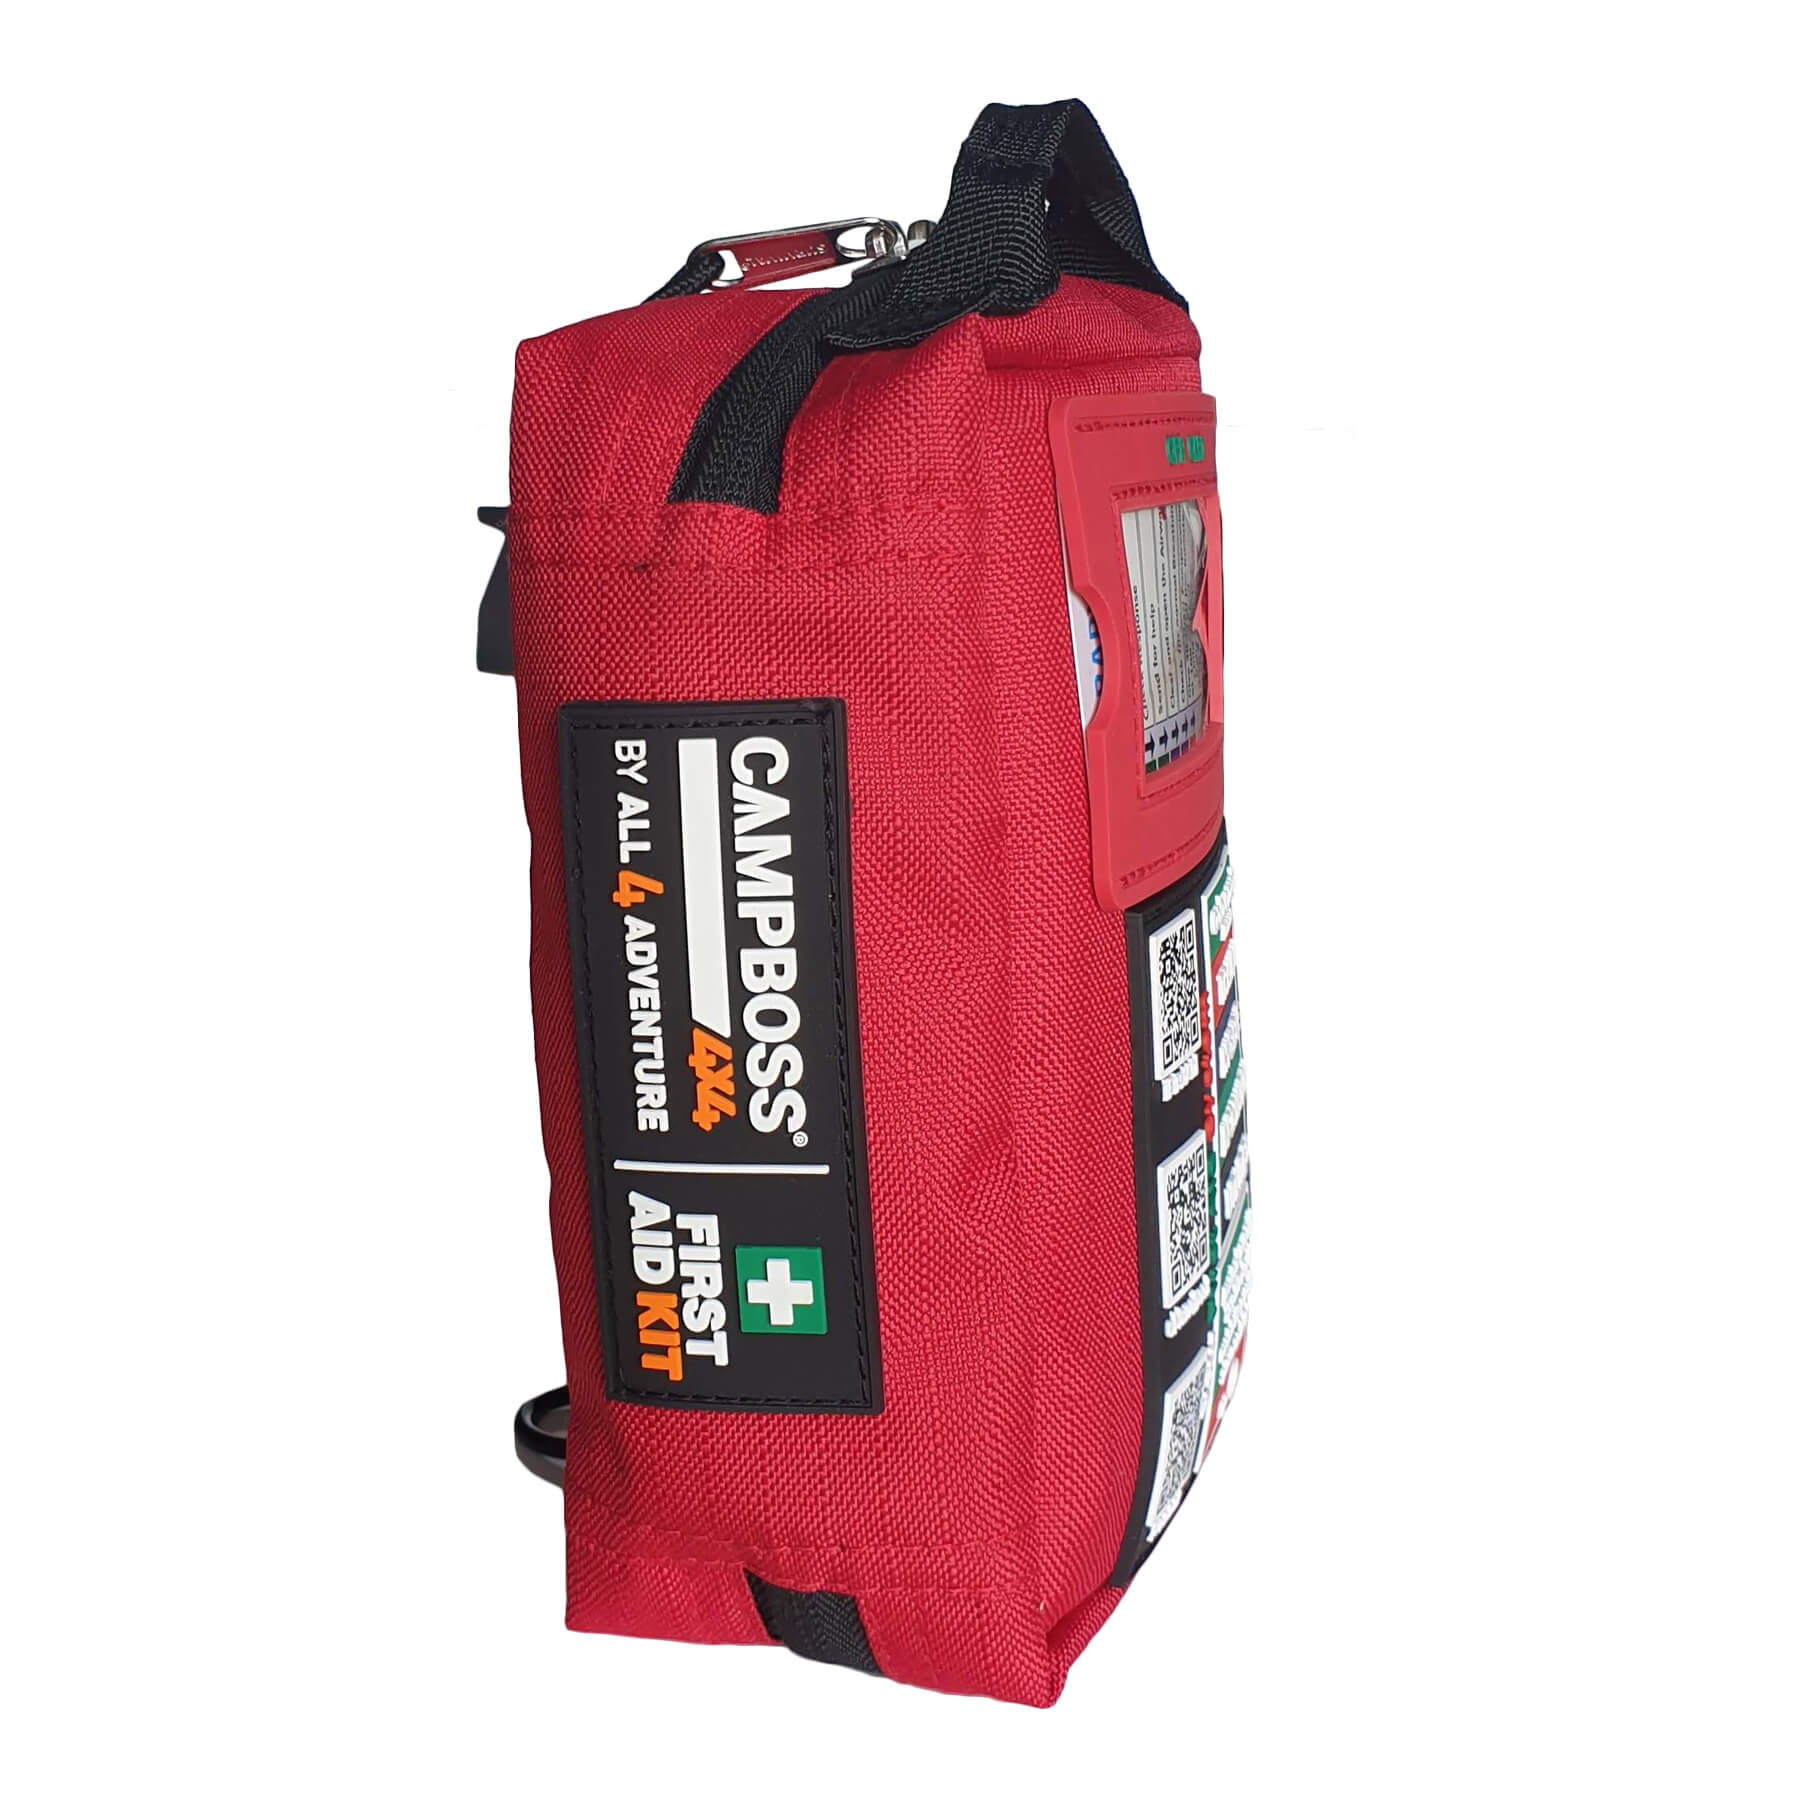 4x4 First Aid Kit